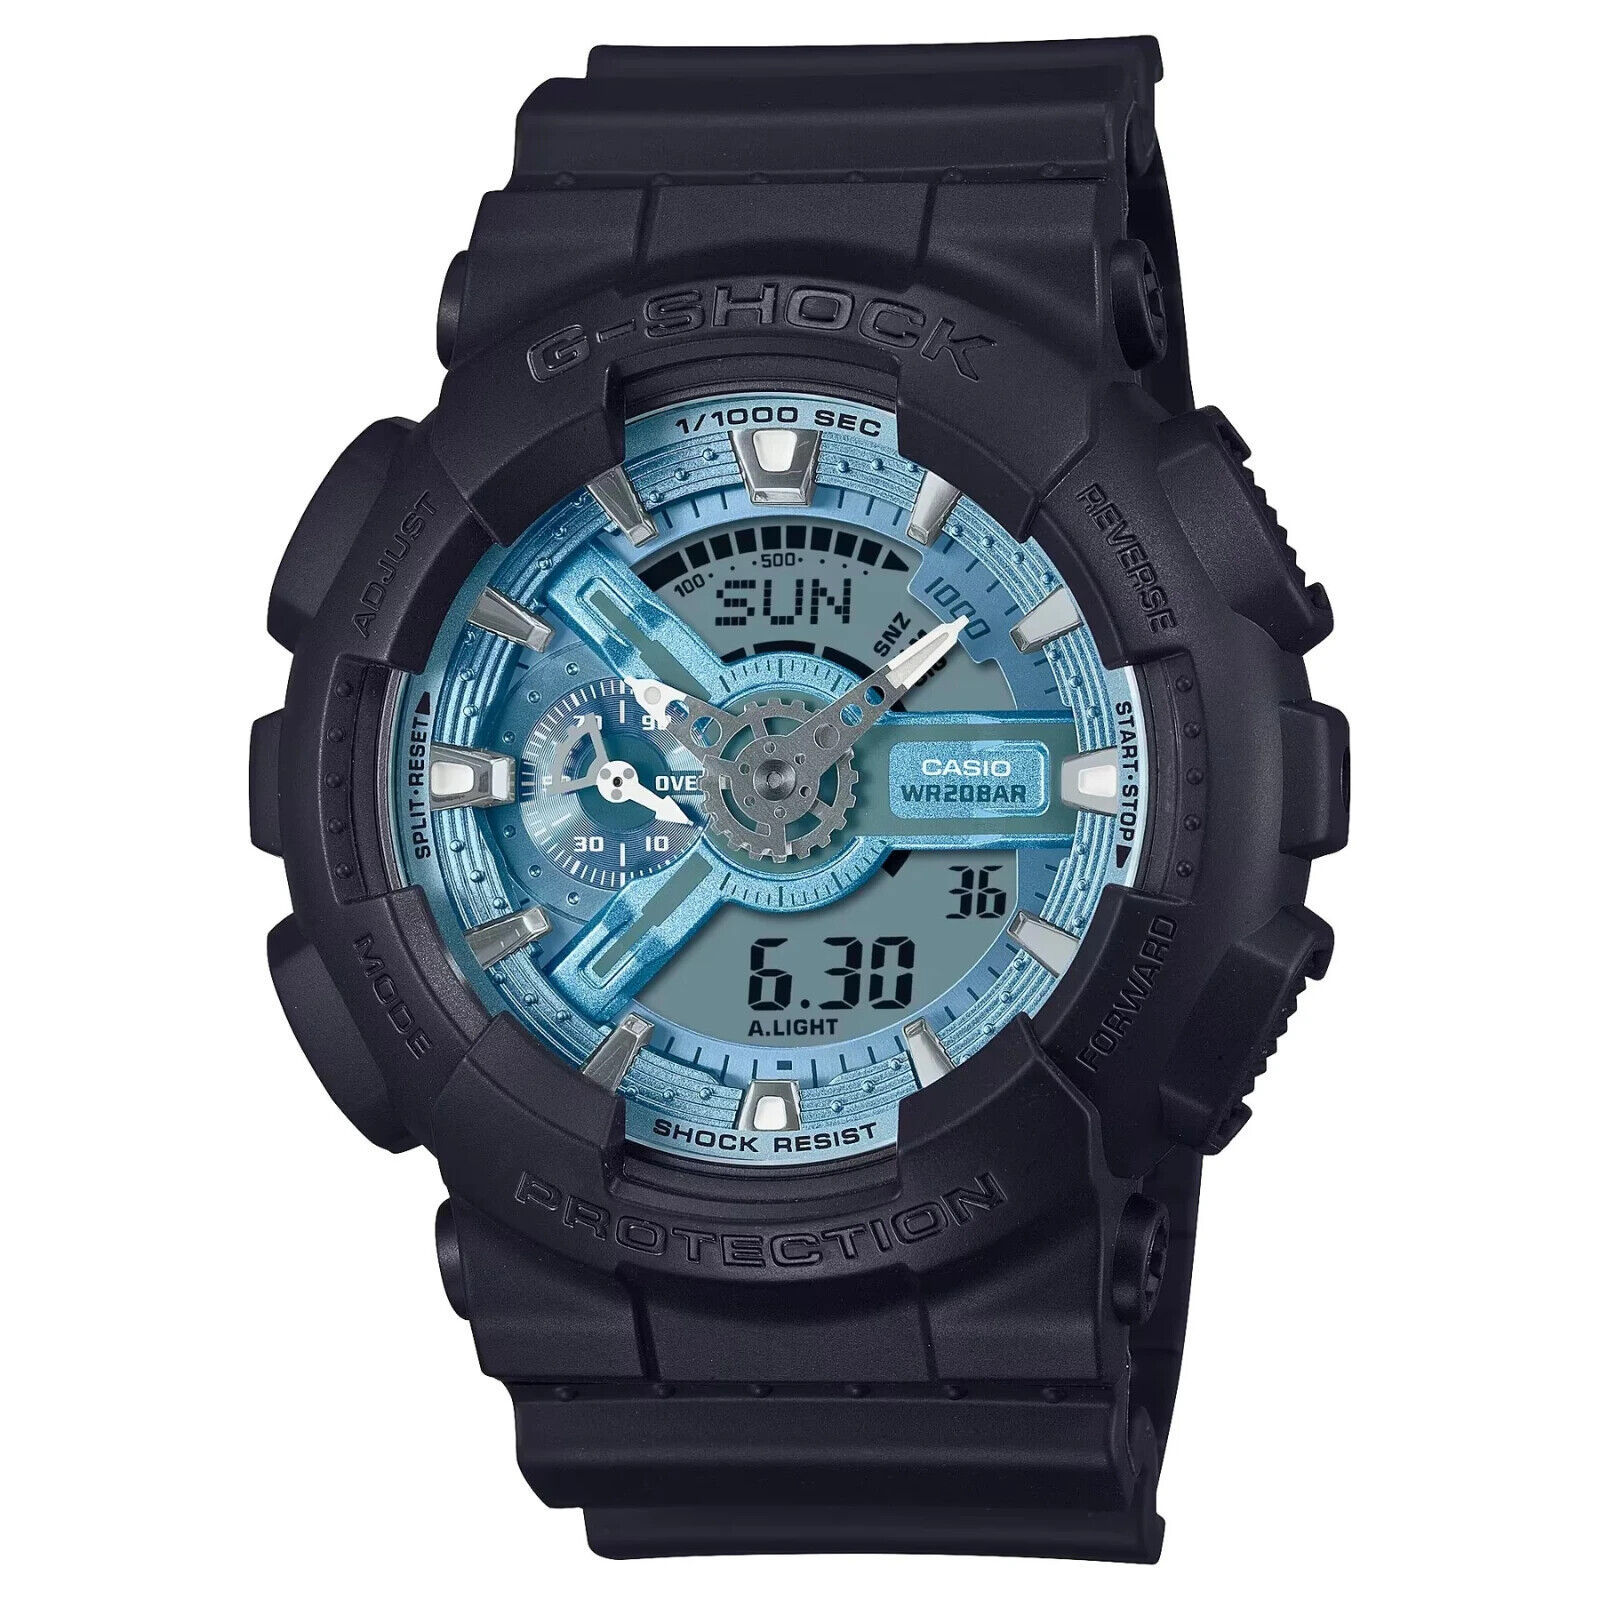 Primary image for Casio G-Shock Analog/Digital Blue Dial Black Watch GA-110CD-1A2 / GA110CD-1A2